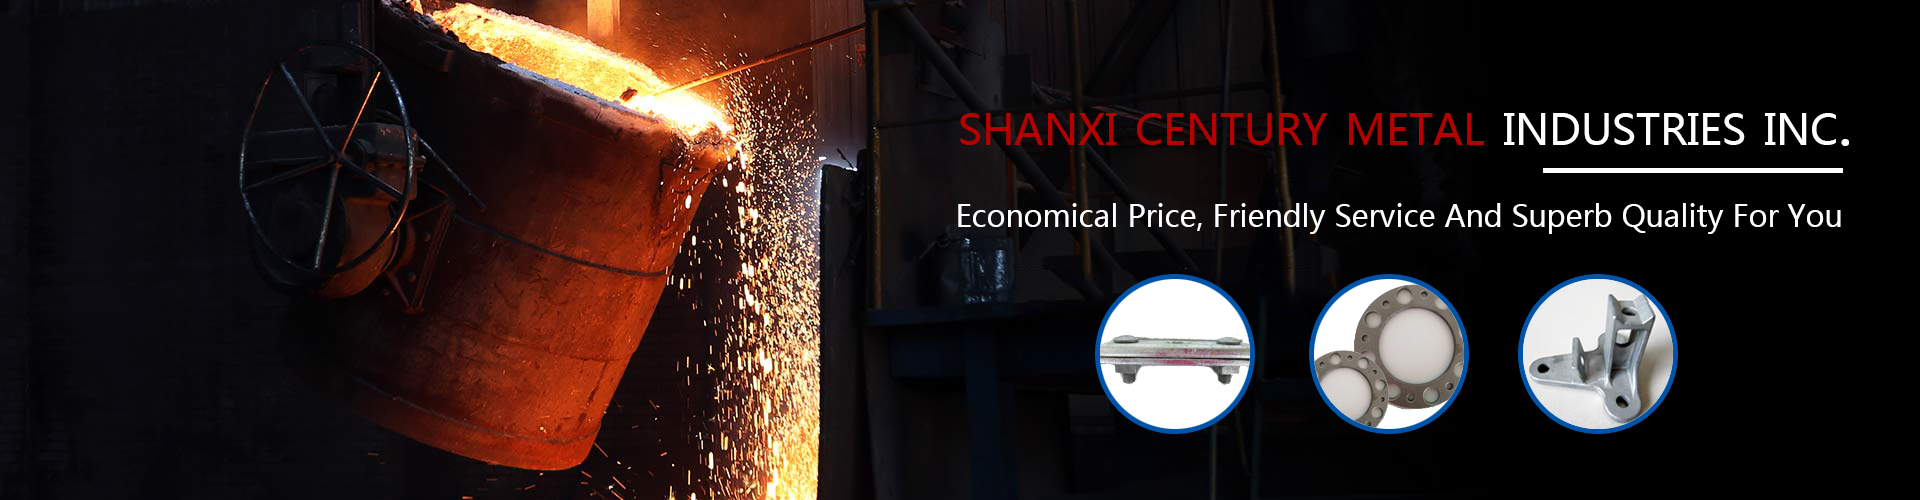 Shanxi Century Metal Industries Inc.